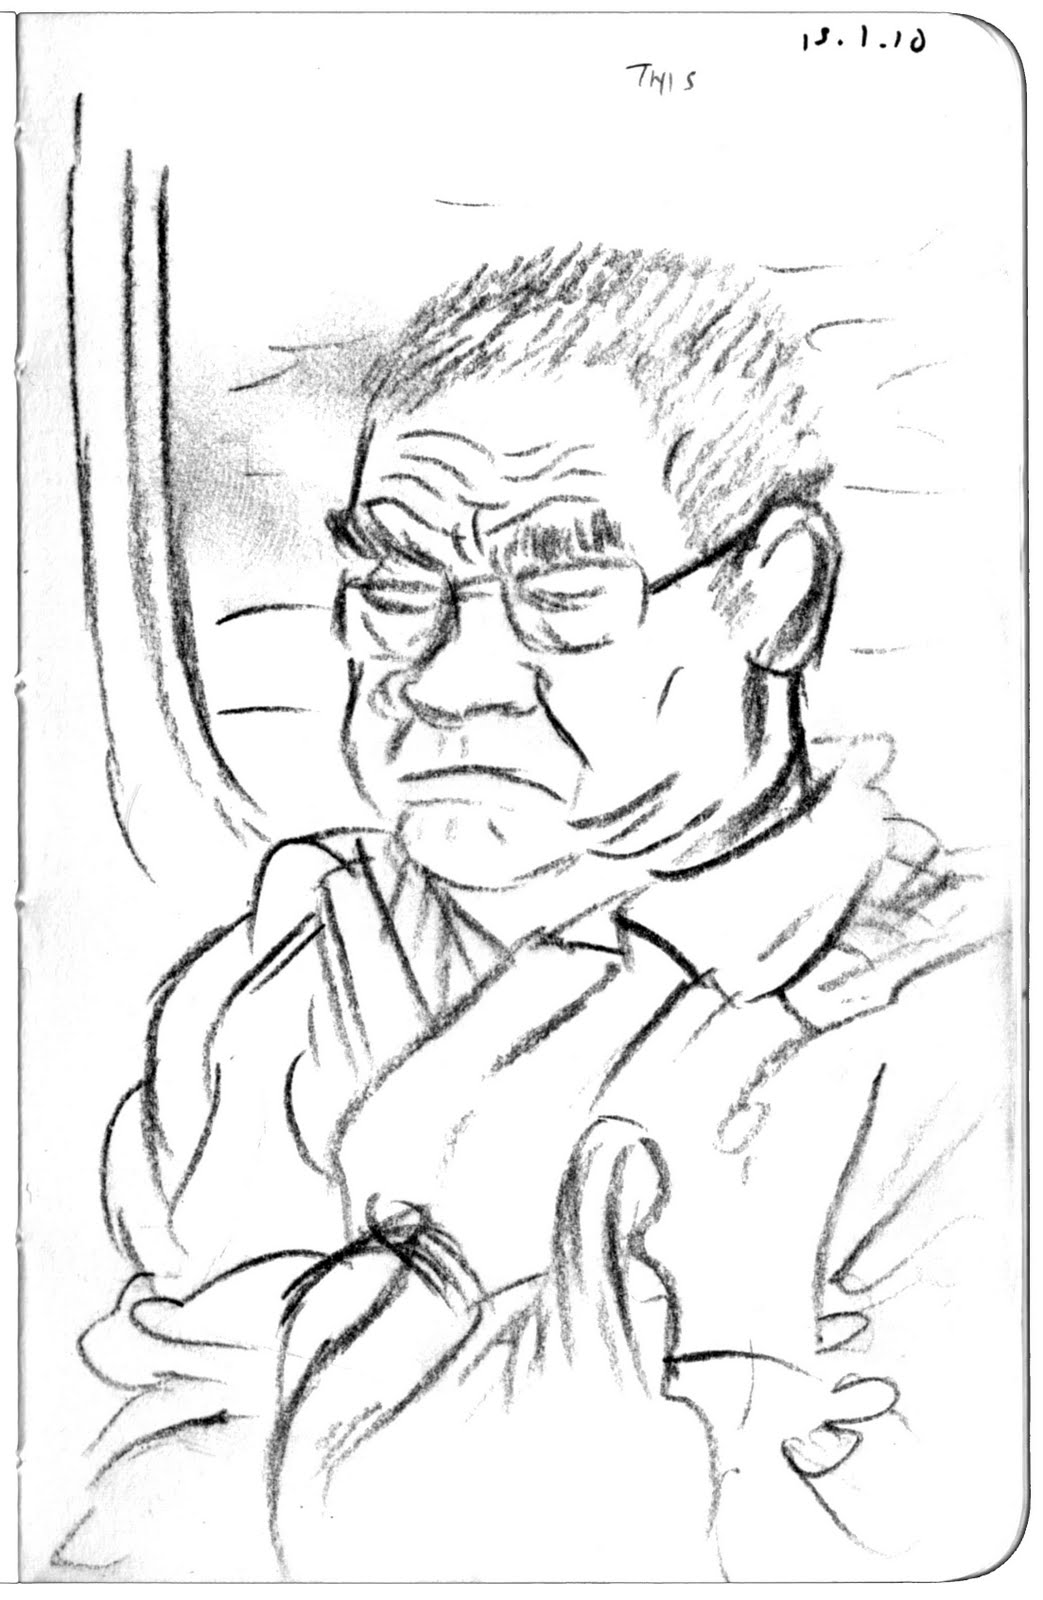 Urban Sketchbook: Scowling Man on Train from Narita